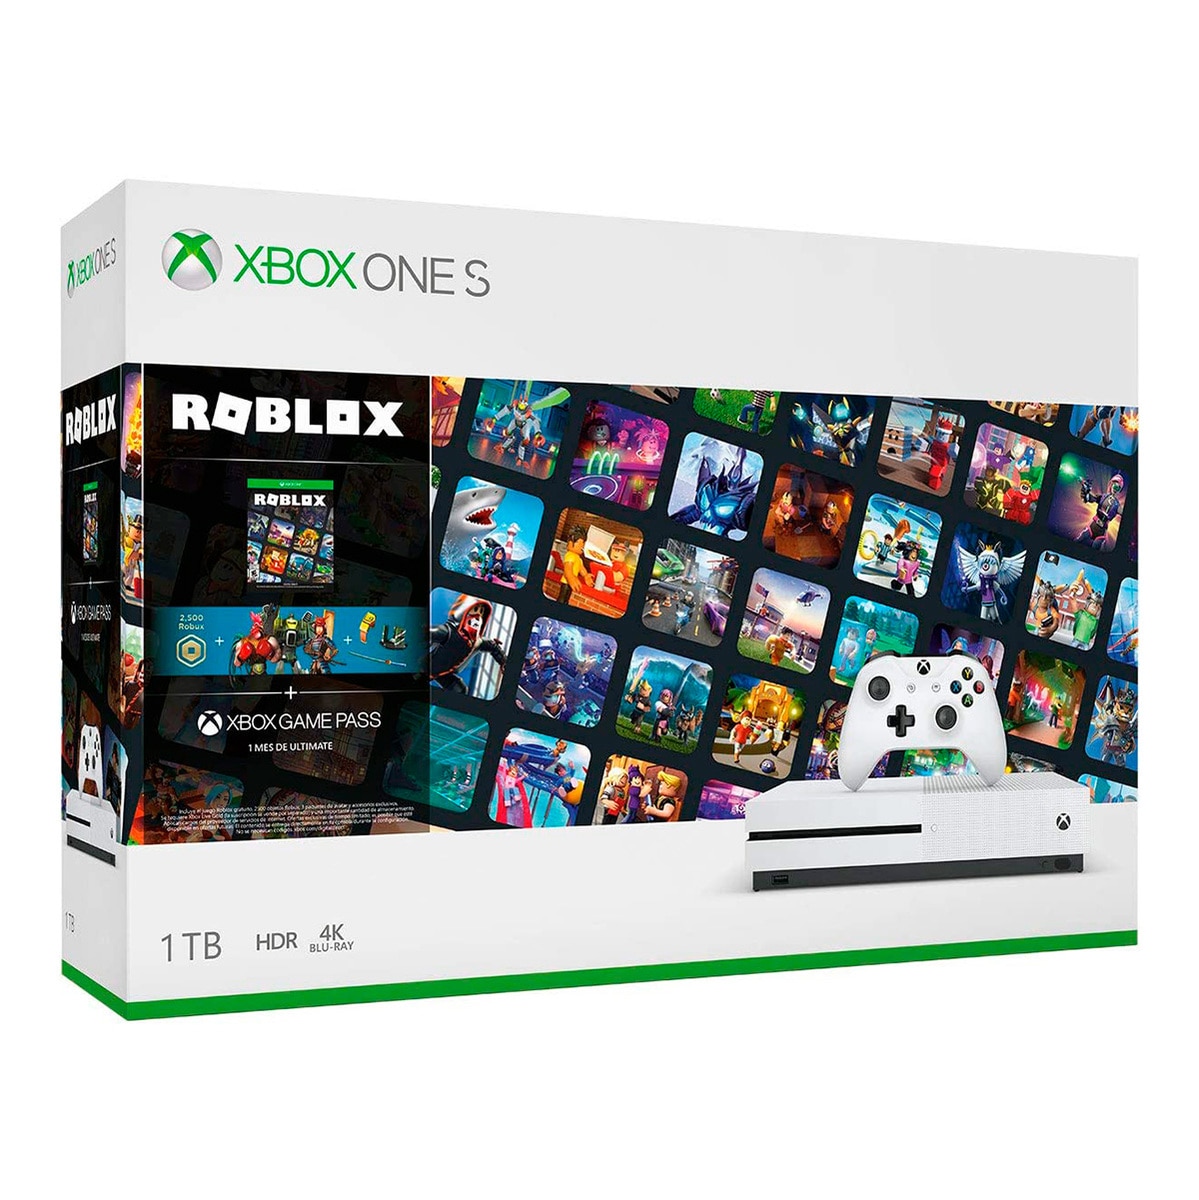 Xbox One S 1 Tb Roblox Costco Mexico - xbox imágenes de roblox